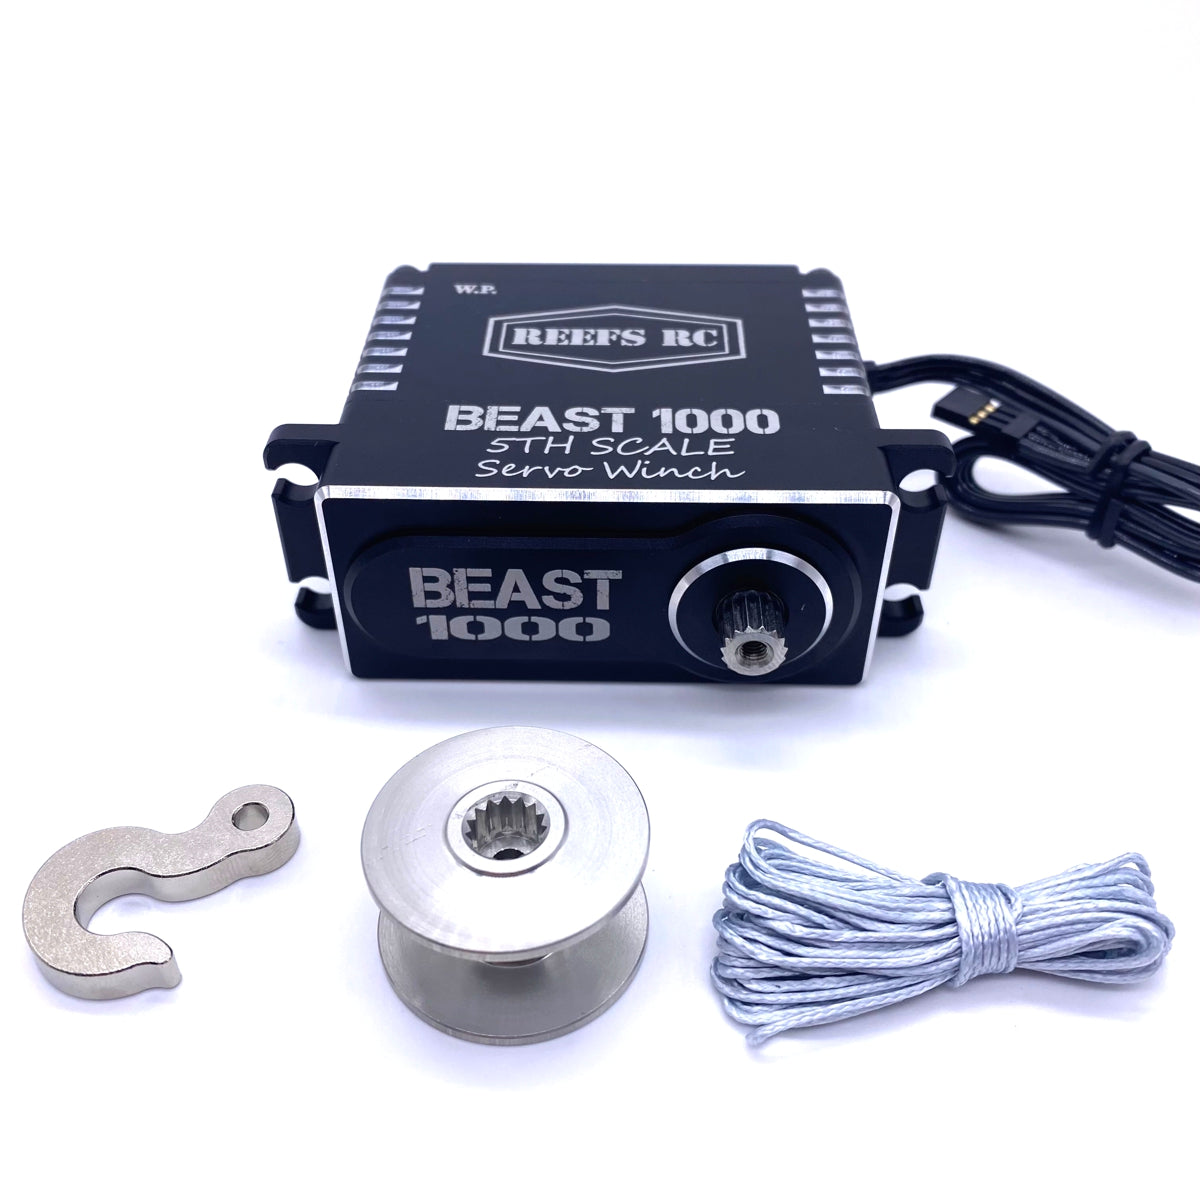 Beast 1000 1/5 Scale Servo Winch